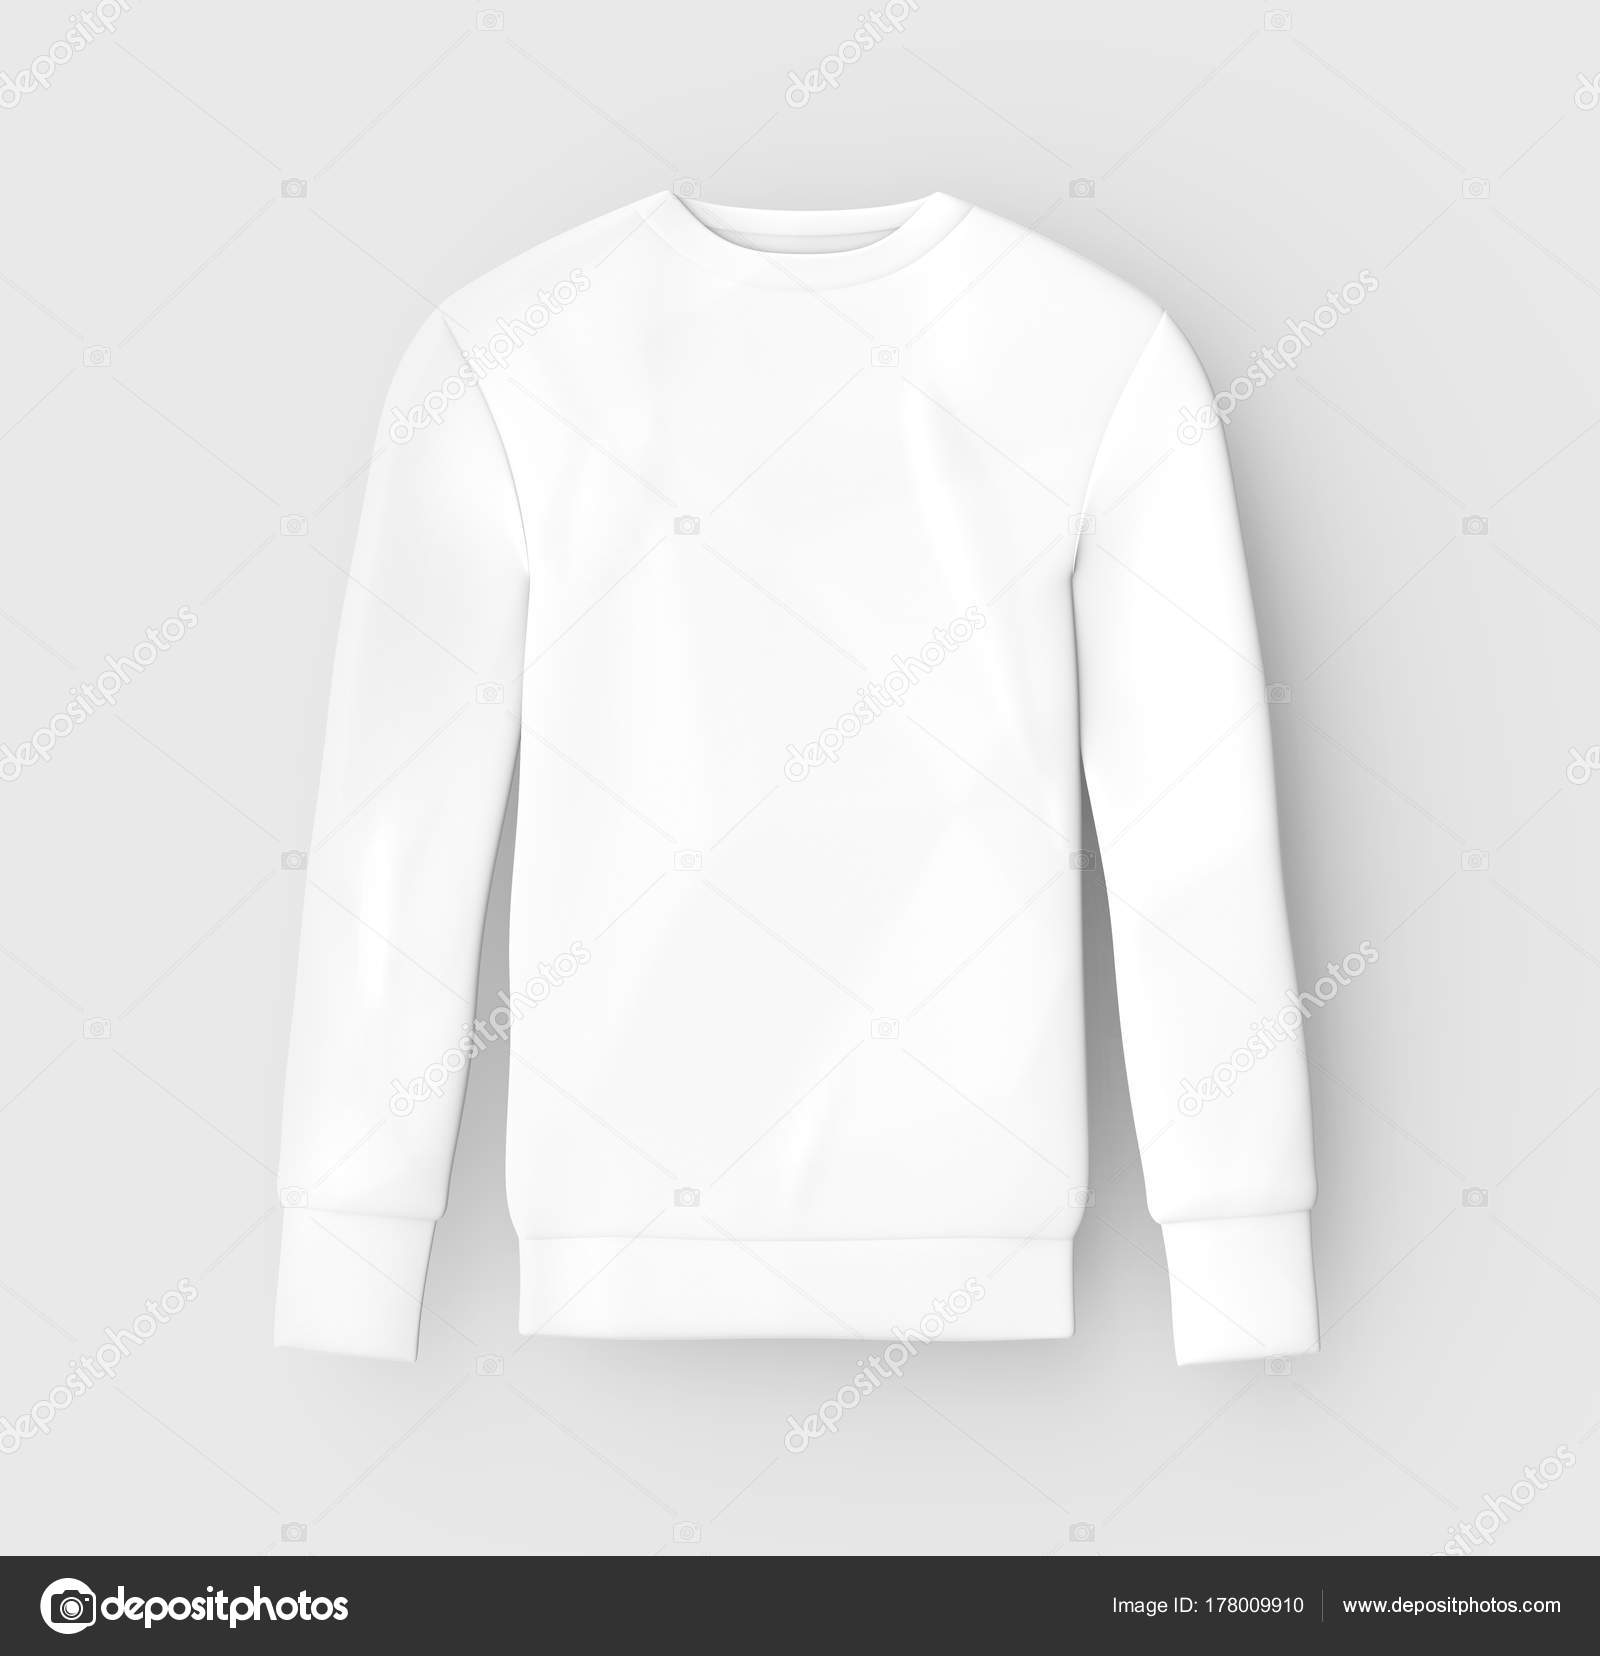 Download Sweatshirt Mockup Template Royalty Free Photo Stock Image By C Kchungtw 178009910